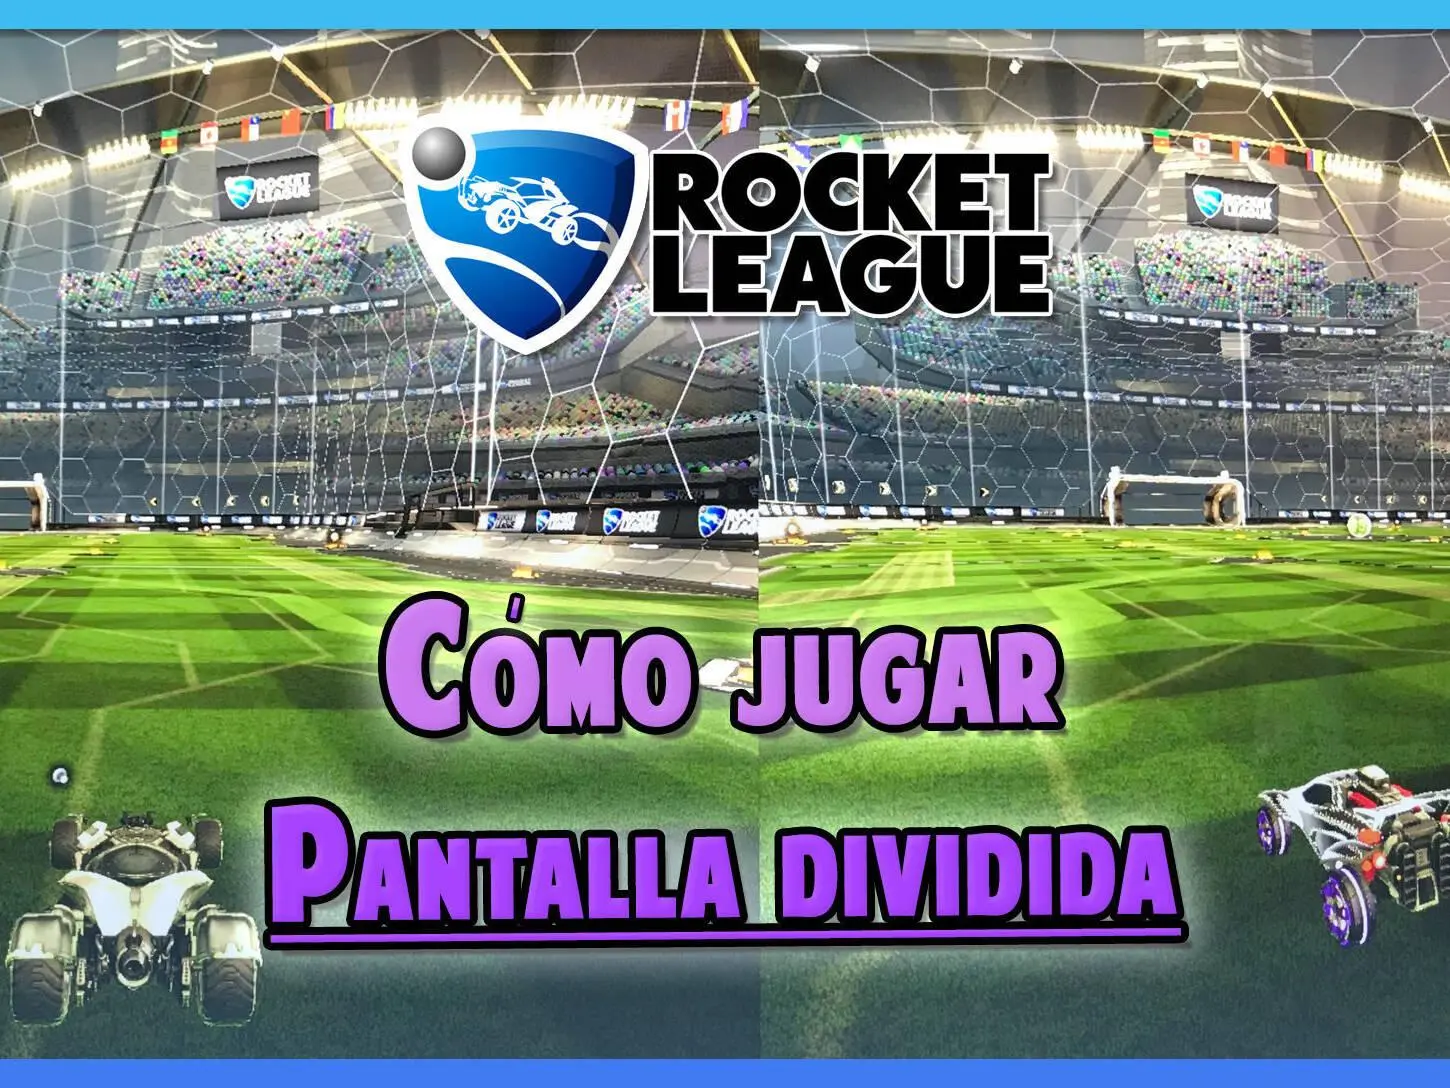 jugar pantalla dividida rocket league pc - Cómo jugar 2vs2 en Rocket League